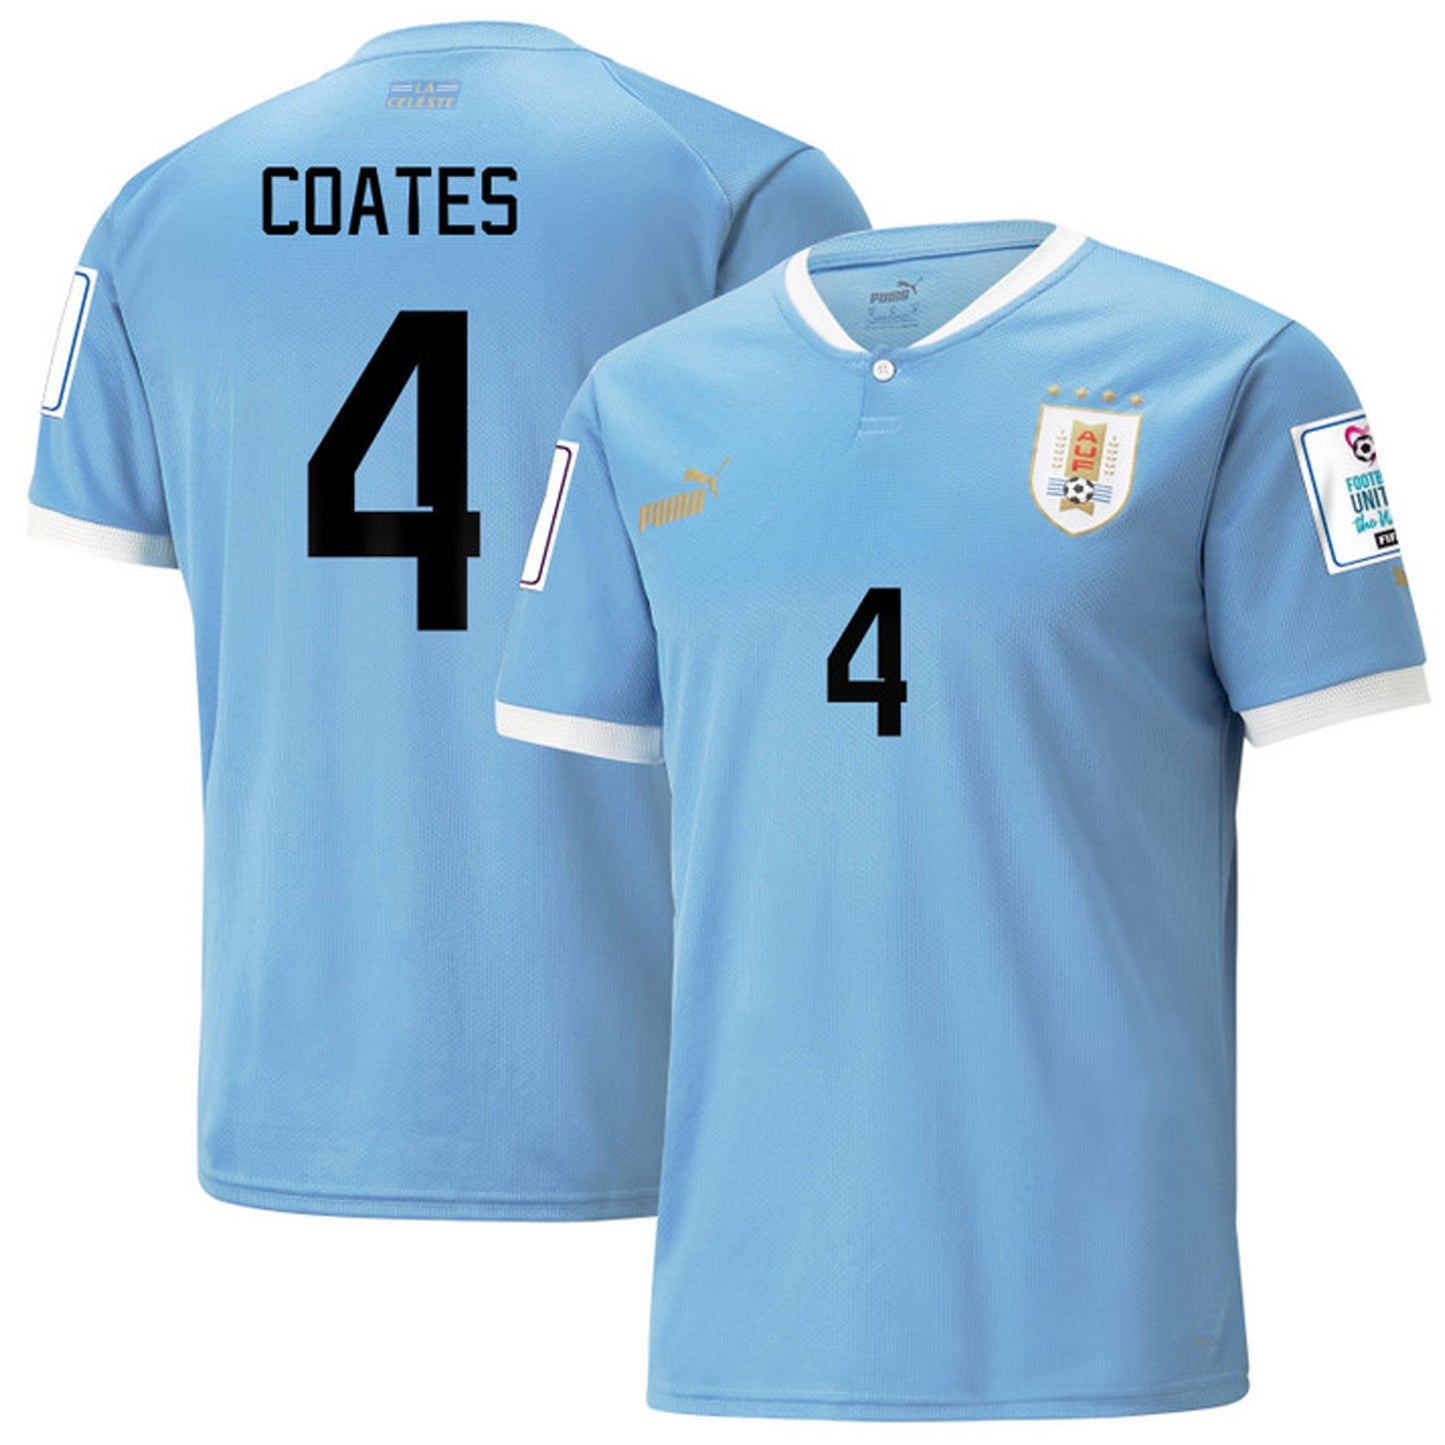 Sebastián Coates Uruguay 4 Fifa World Cup Jersey